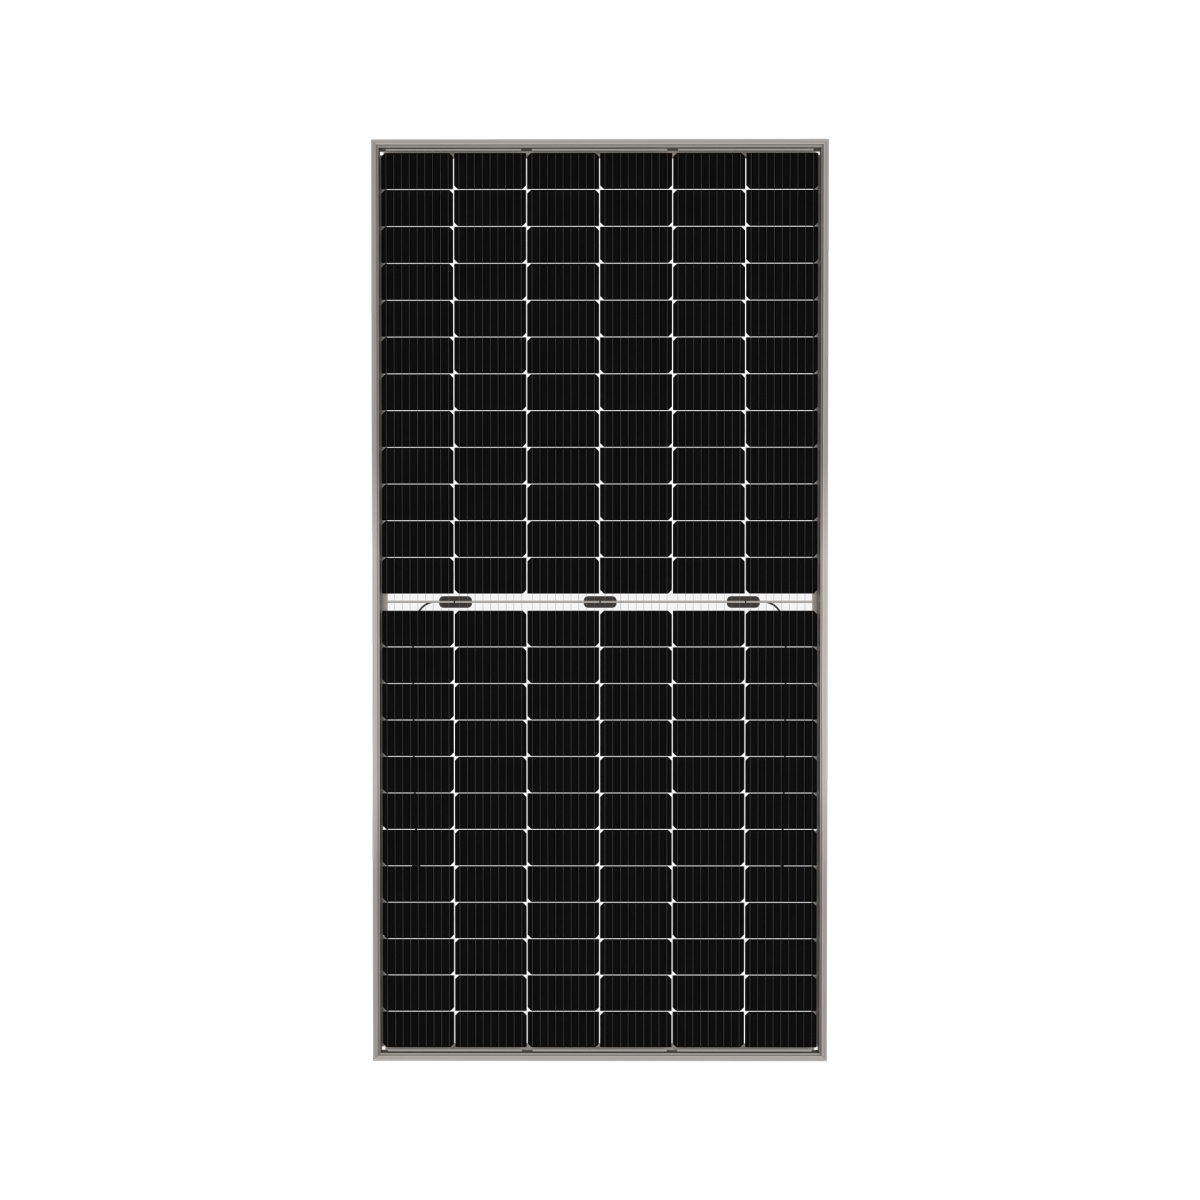 TommaTech 450 Watt 144 Percmono Bifazial Half-Cut Multi Busbar Solarpanel